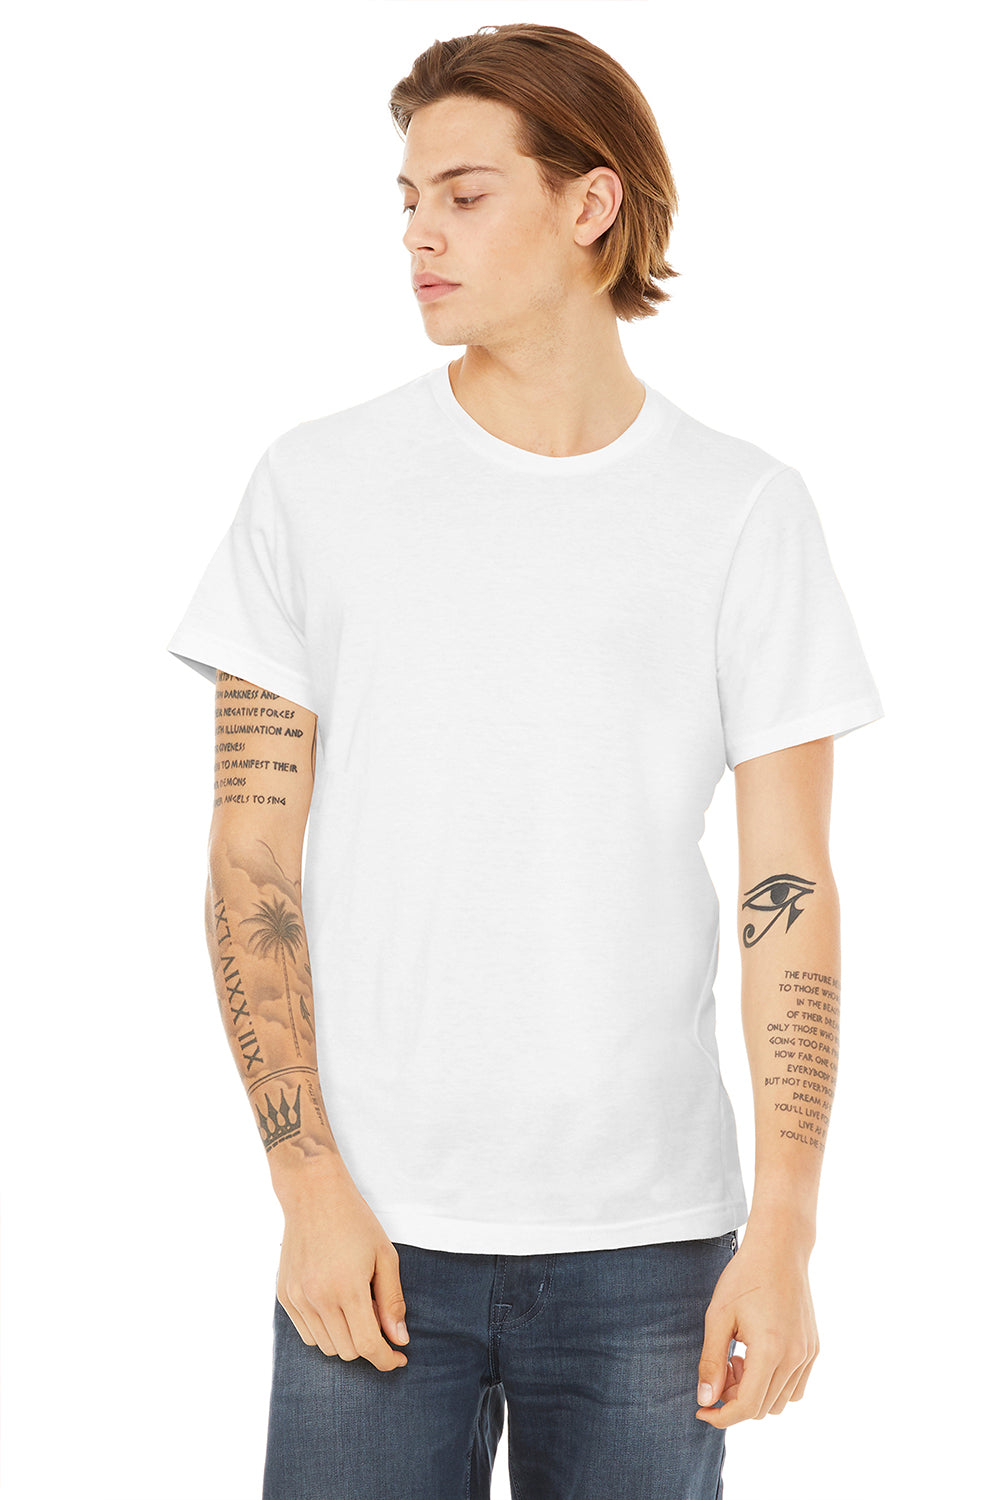 Bella + Canvas BC3650/3650 Mens Short Sleeve Crewneck T-Shirt White Model Front